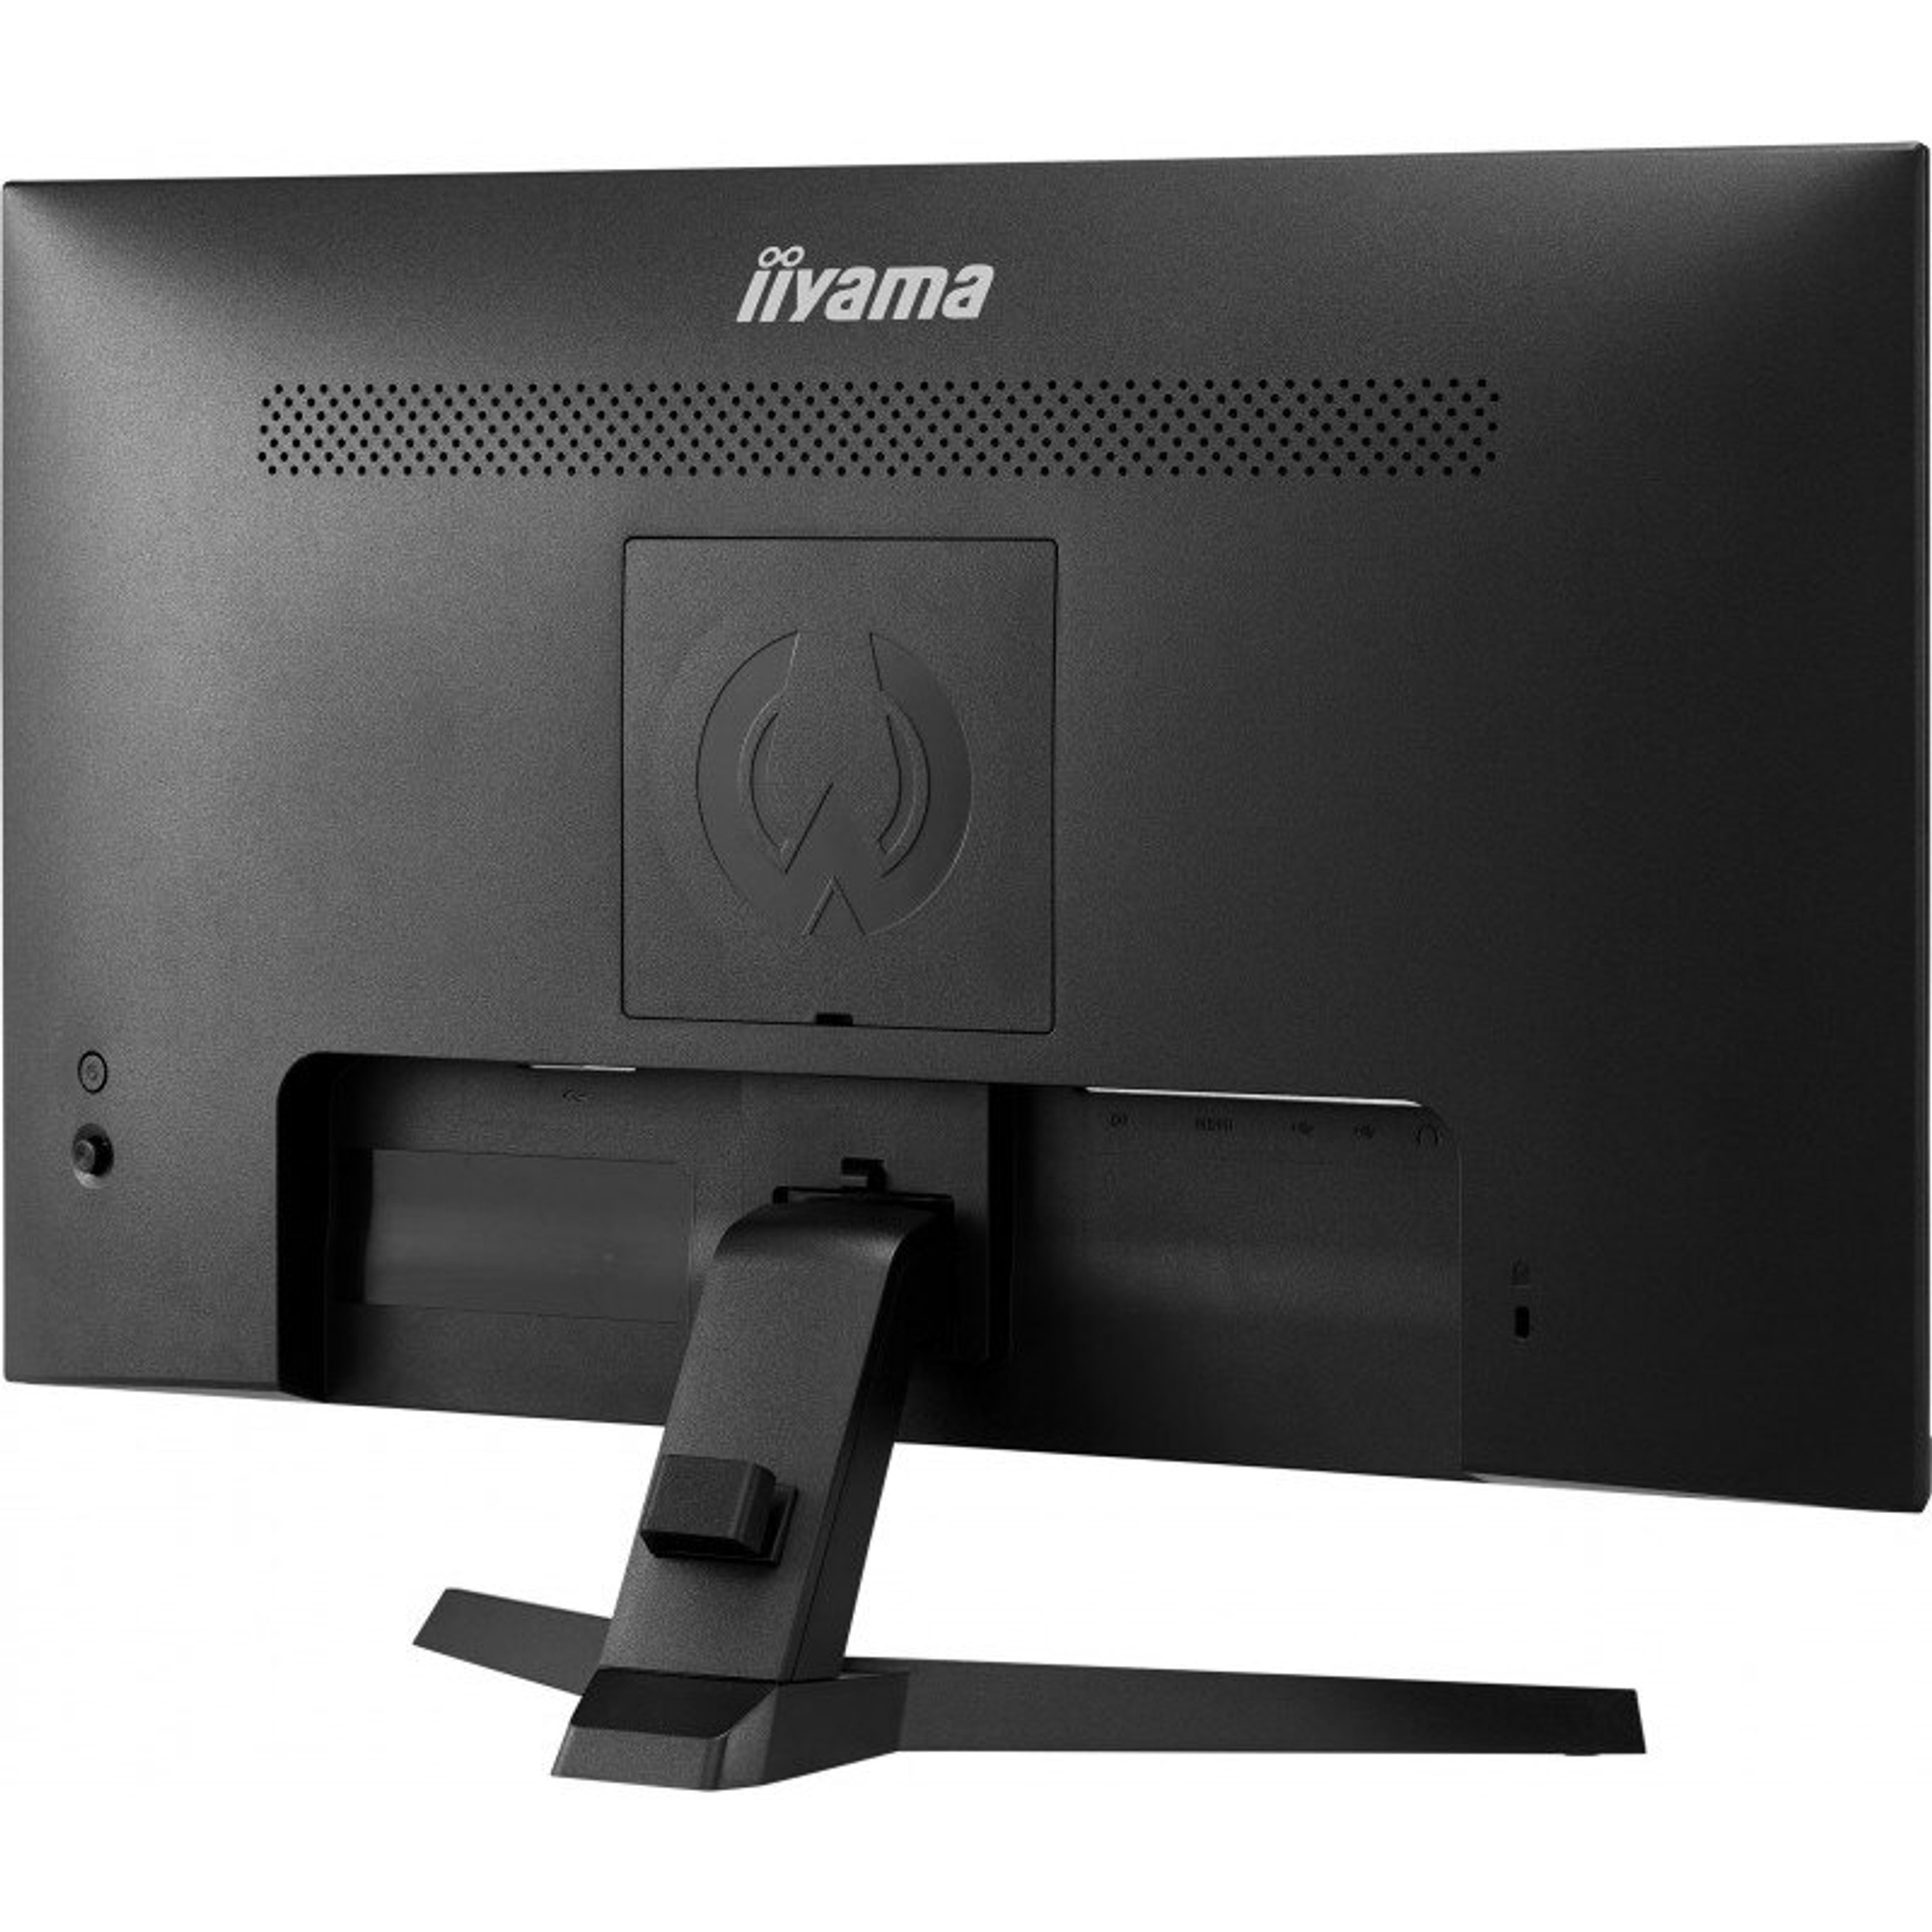 IIYAMA G2740HSU-B1 LCD & LED monitorok 5